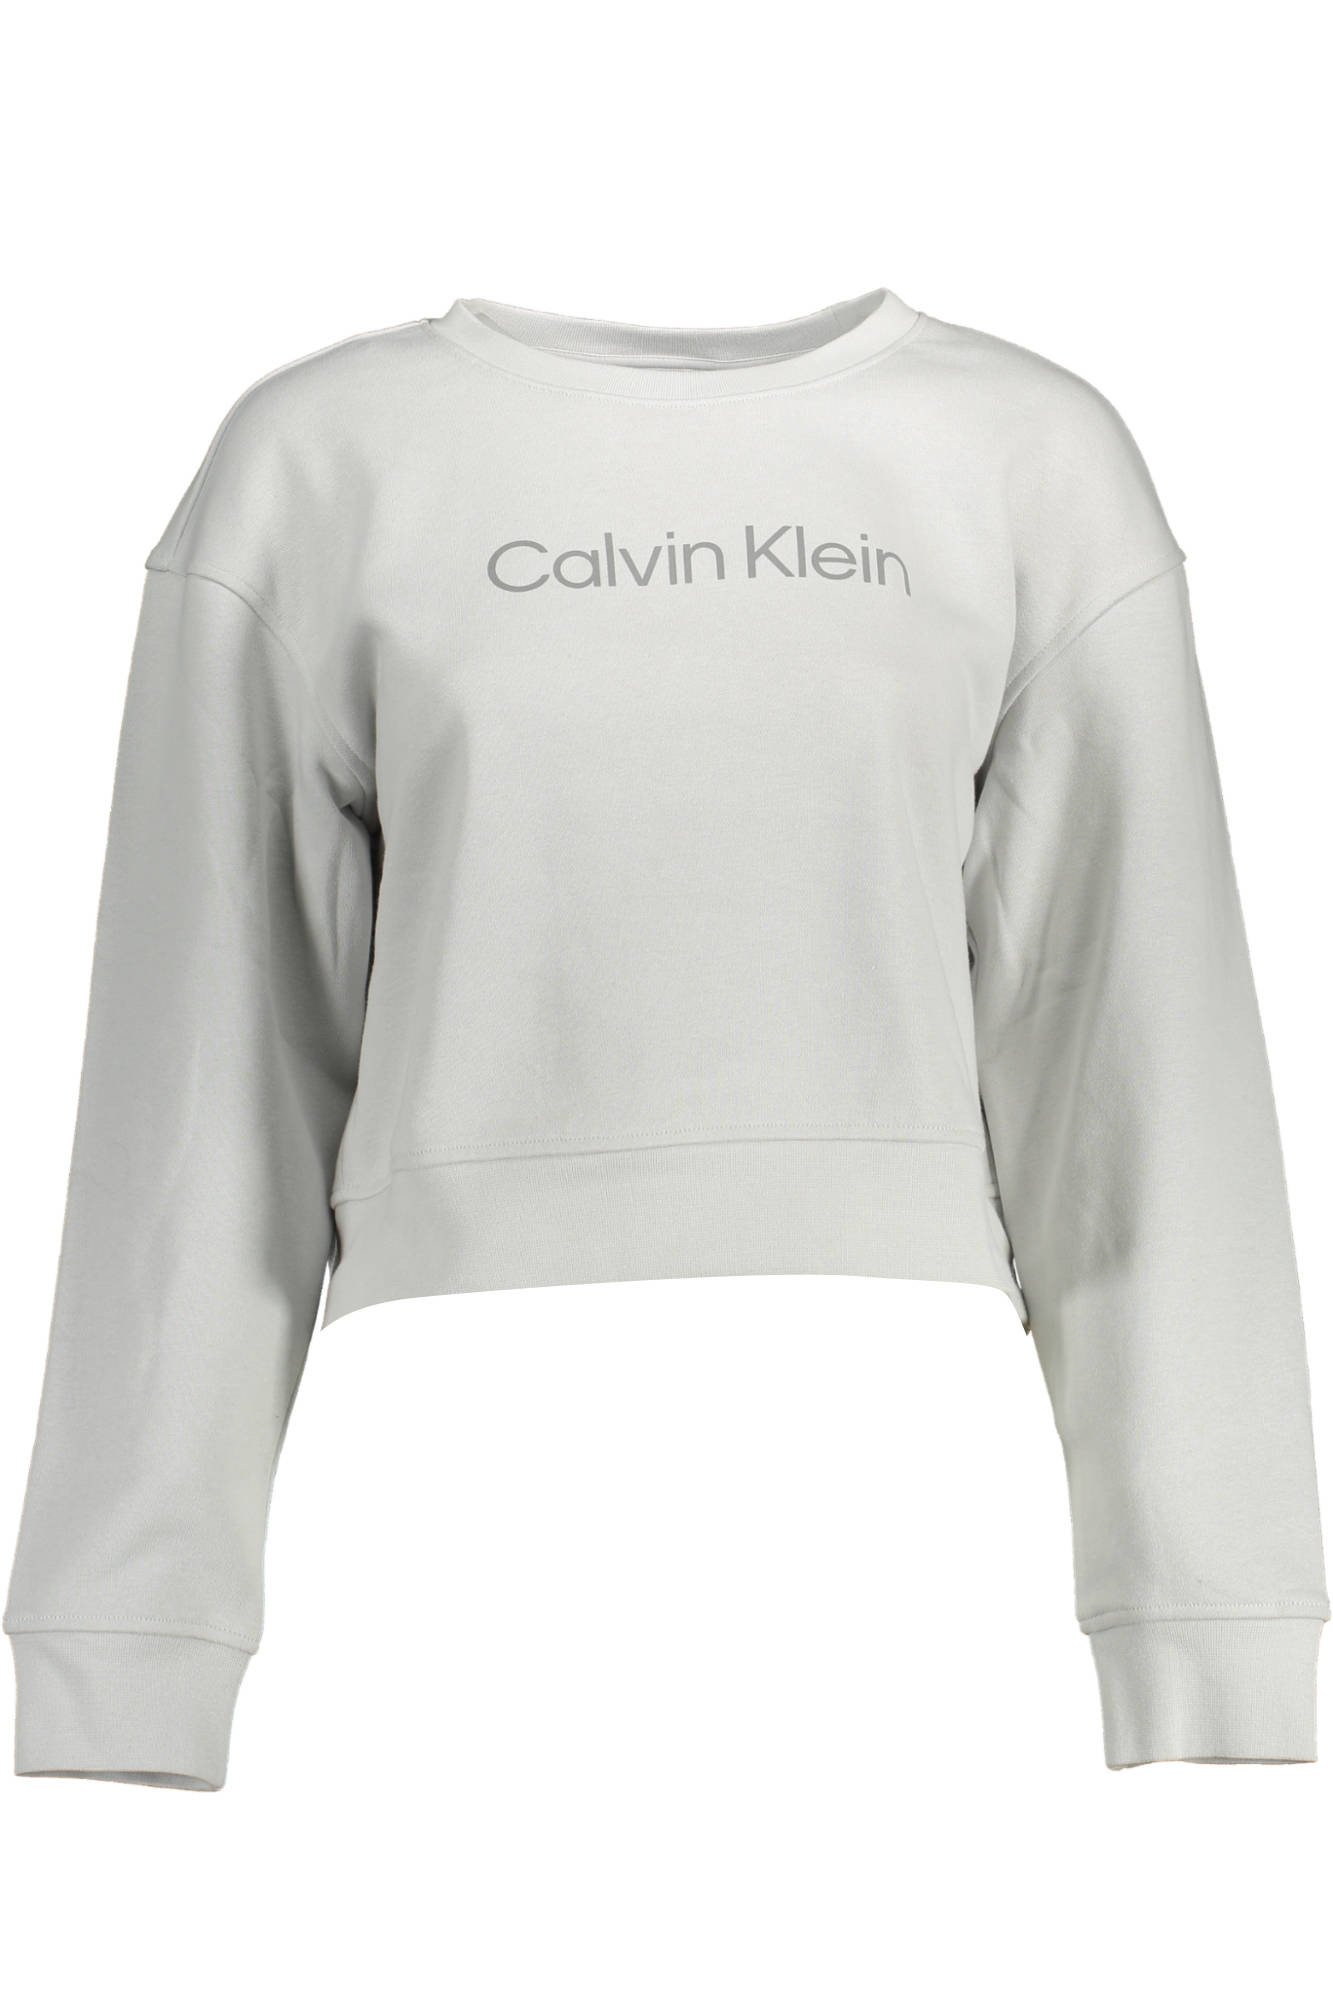 Calvin Klein 00gws2w312 trui zonder rits